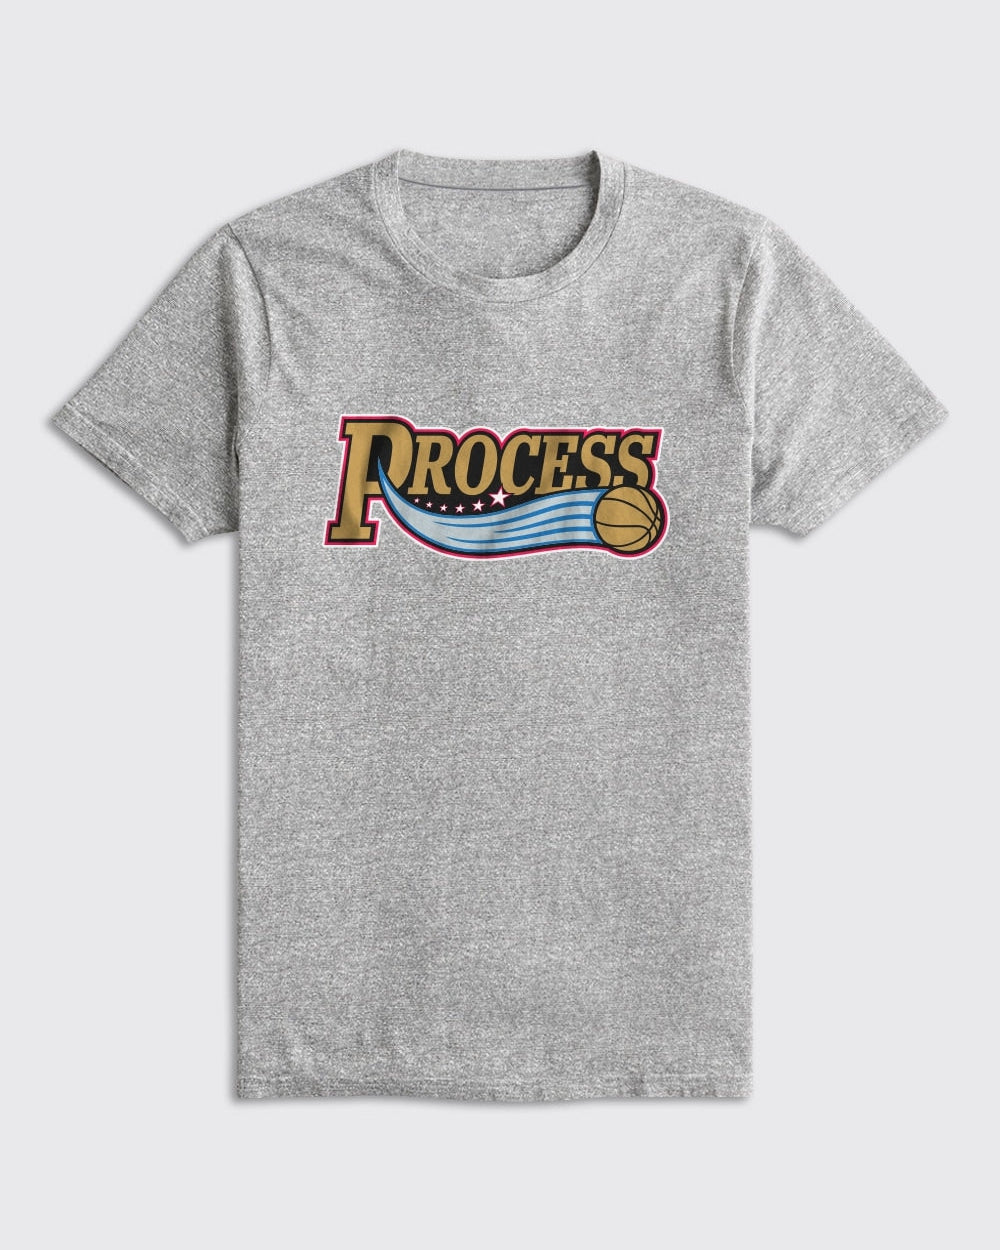 Process Logo Shirt-Philly Sports Shirts